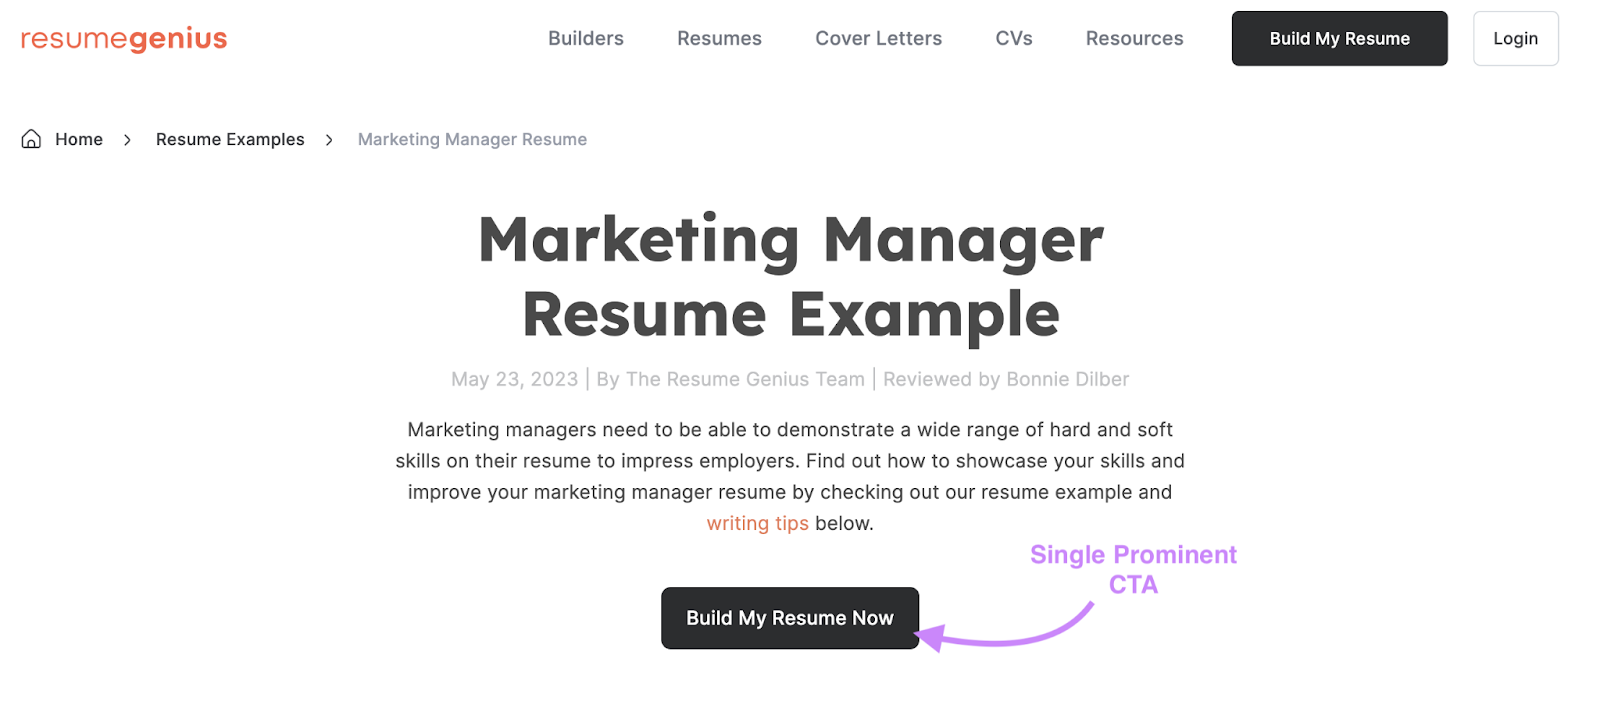 Resume Genius's "Build My Resume Now" CTA